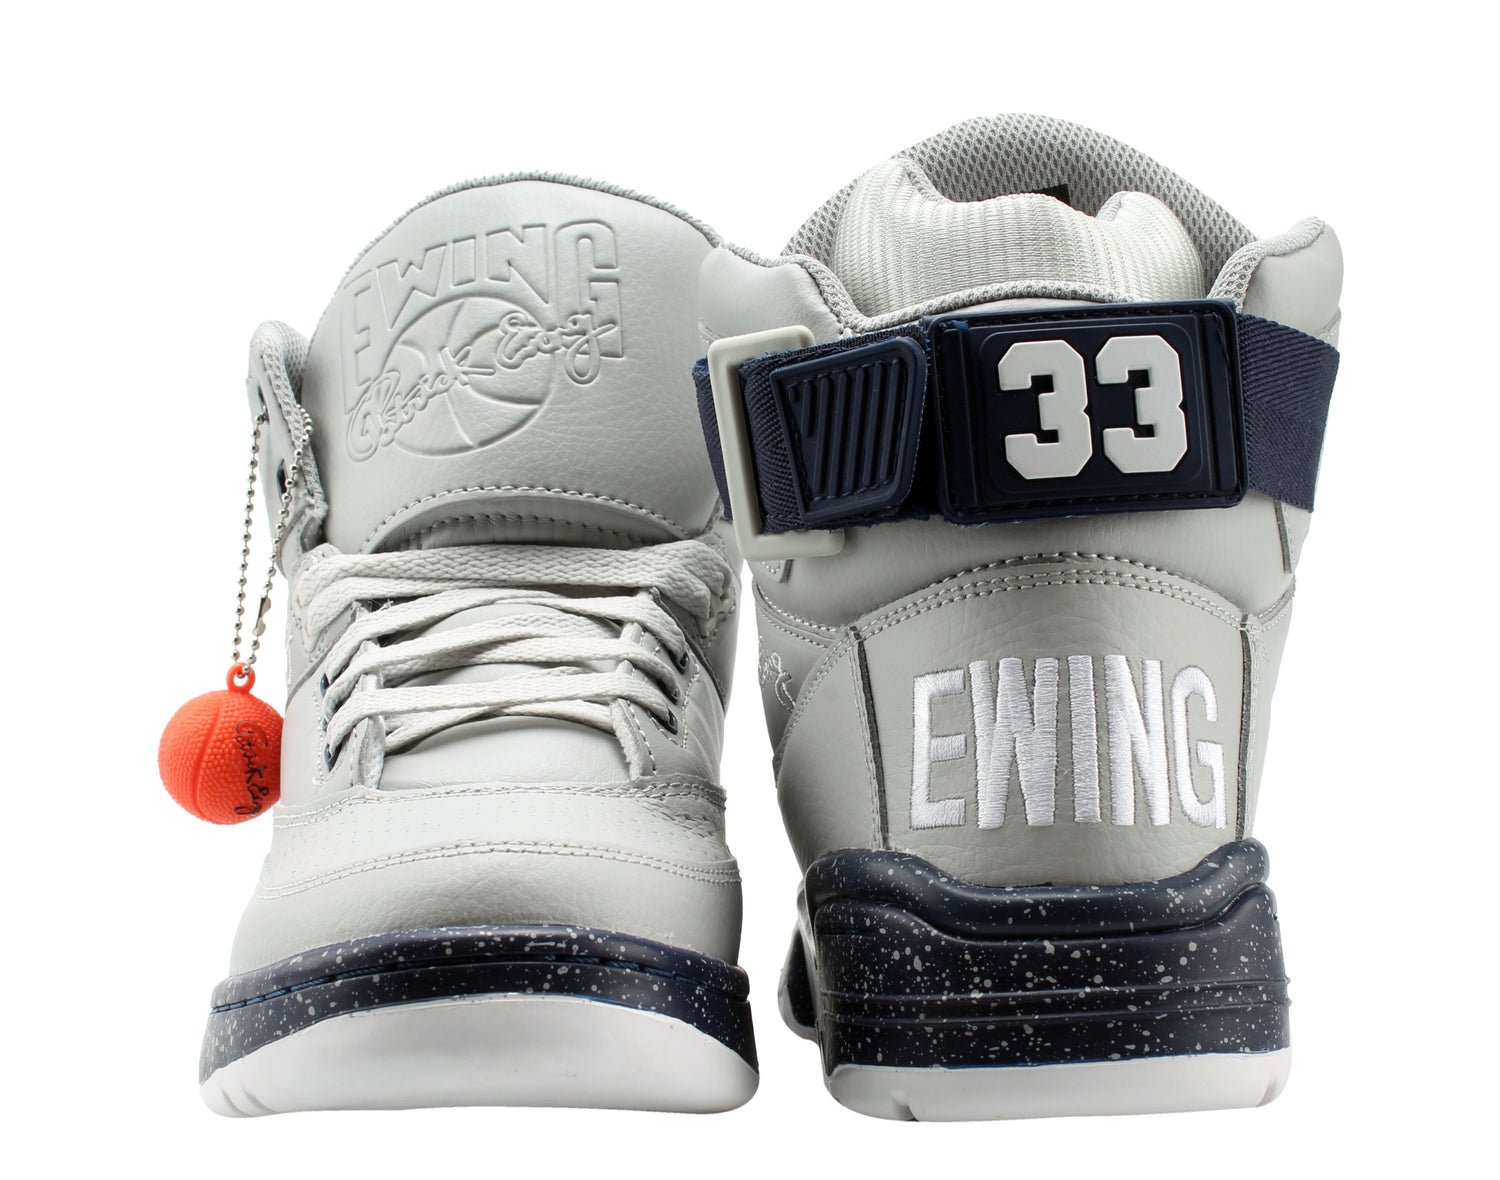 Ewing Athletics Ewing 33 Hi G-Town Away Men's Basketball Shoes